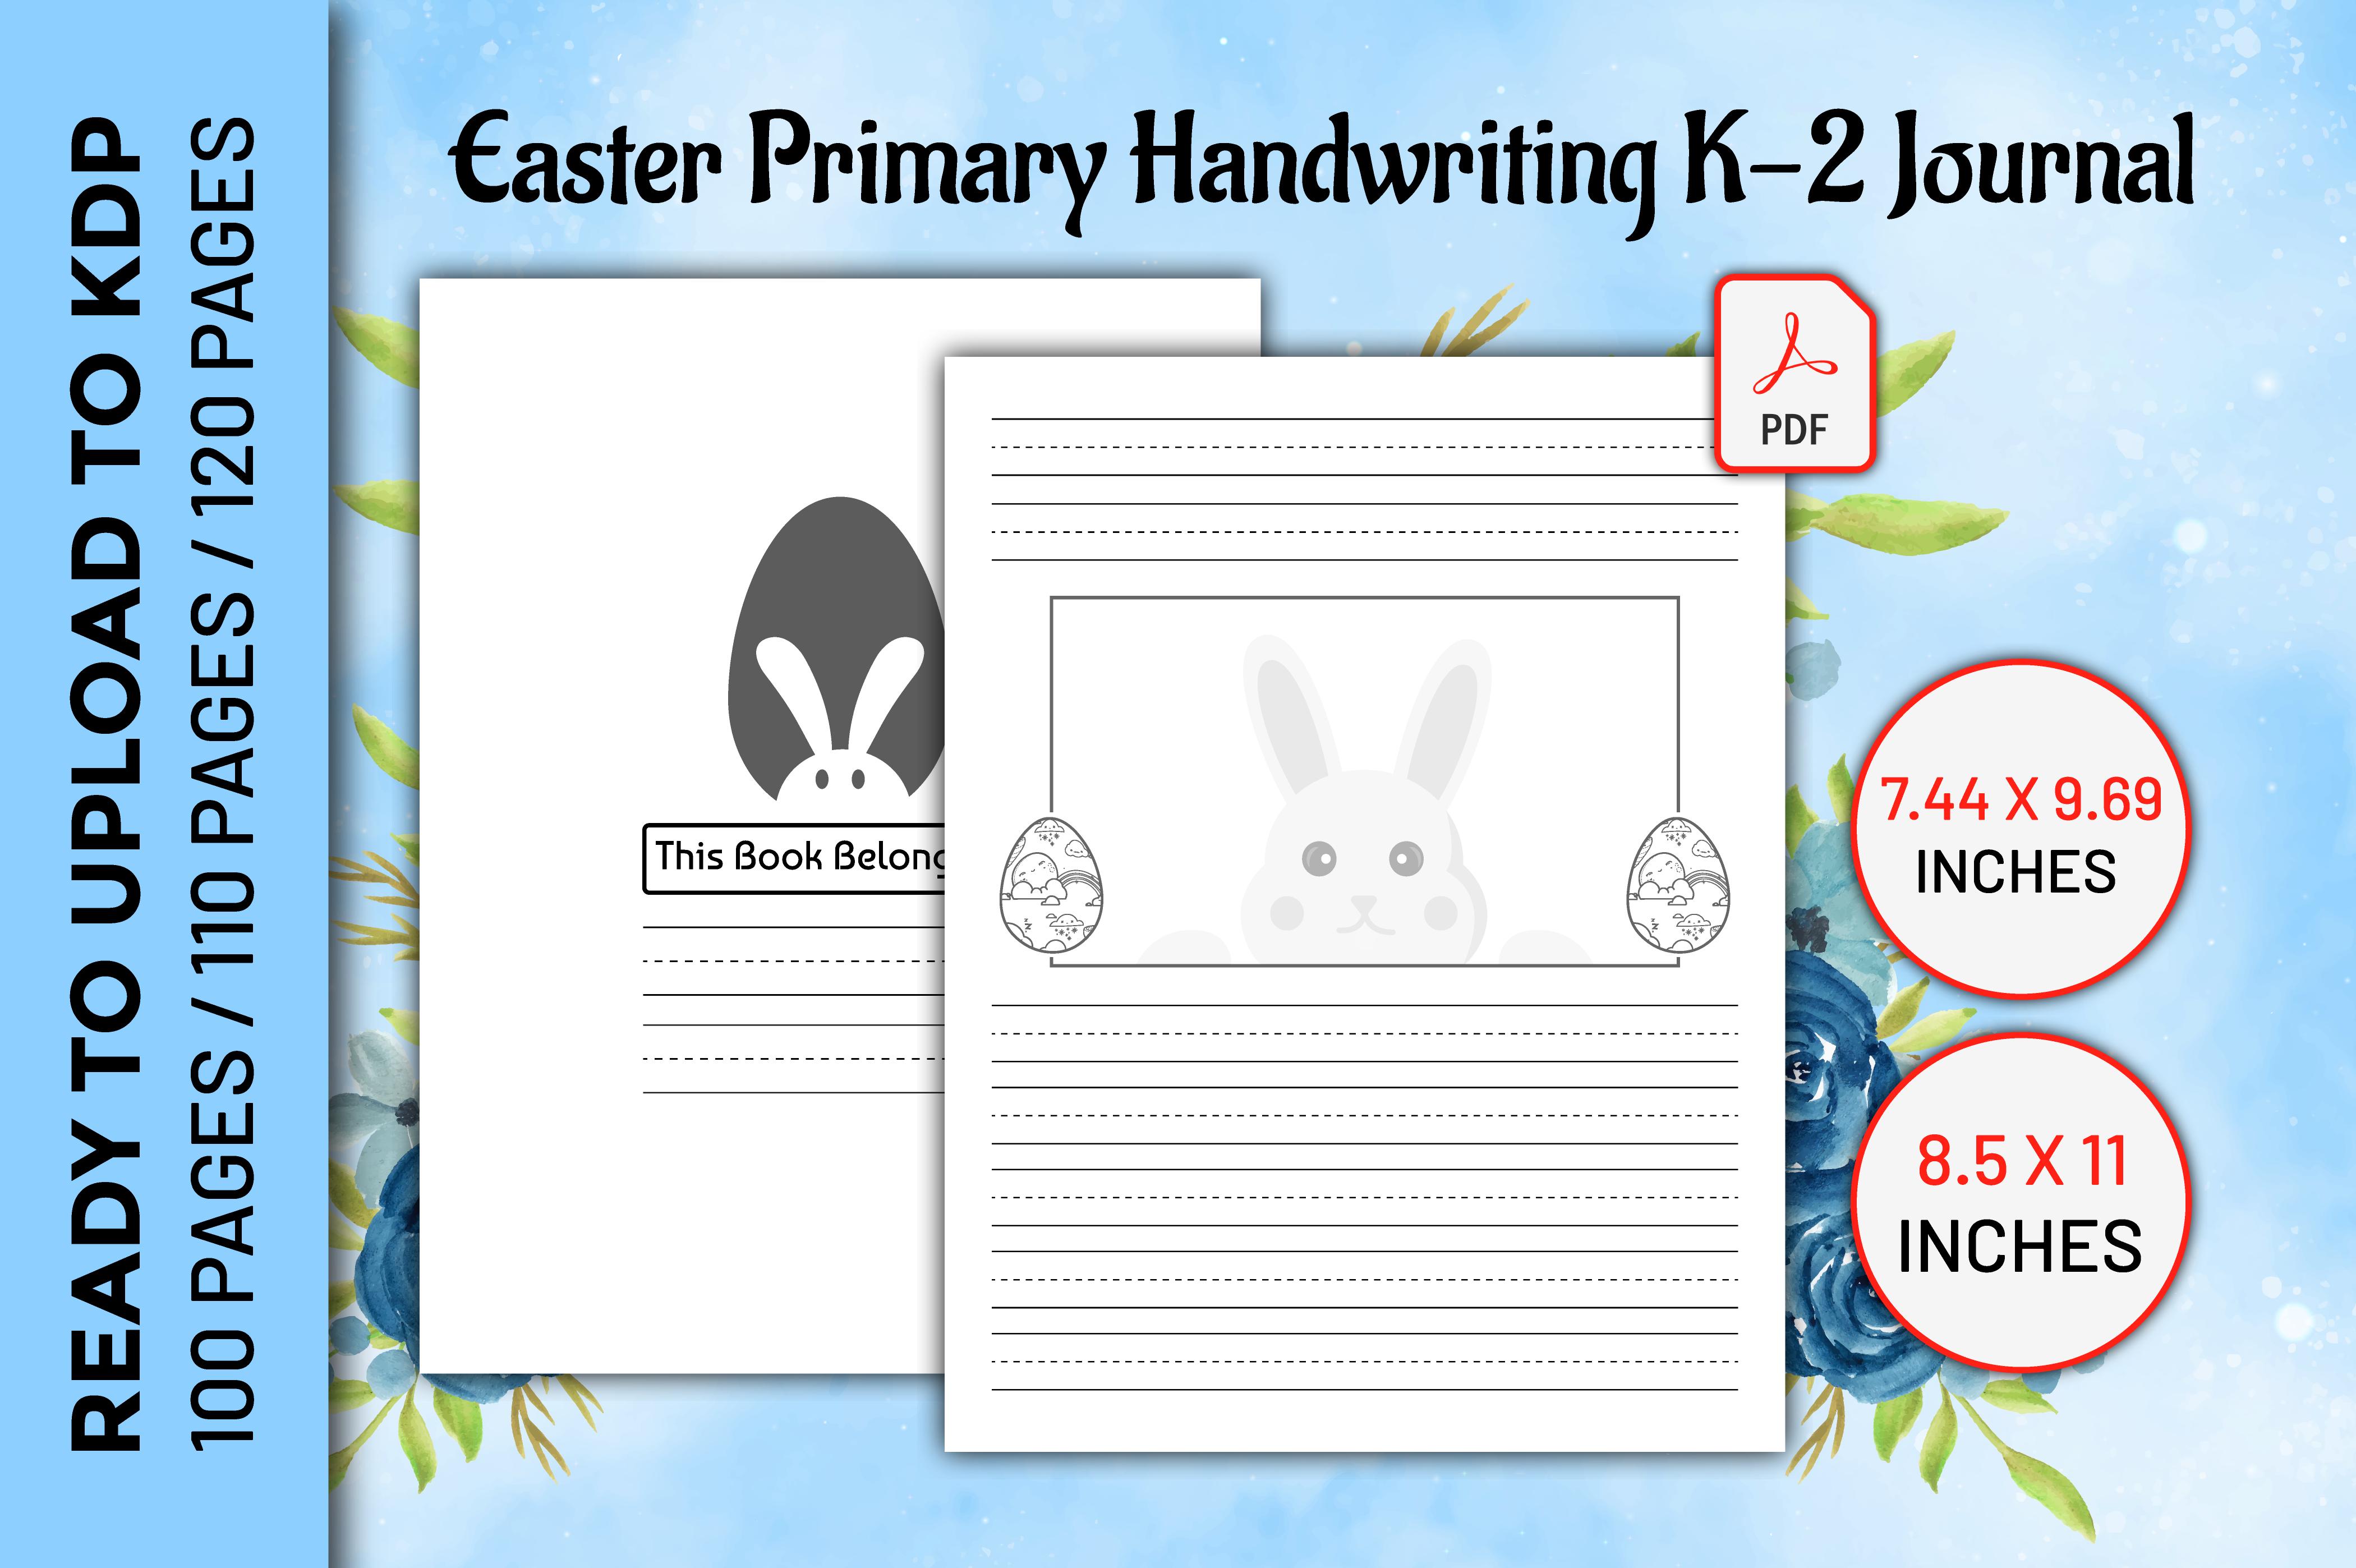 Easter Primary Handwriting K-2 Journal